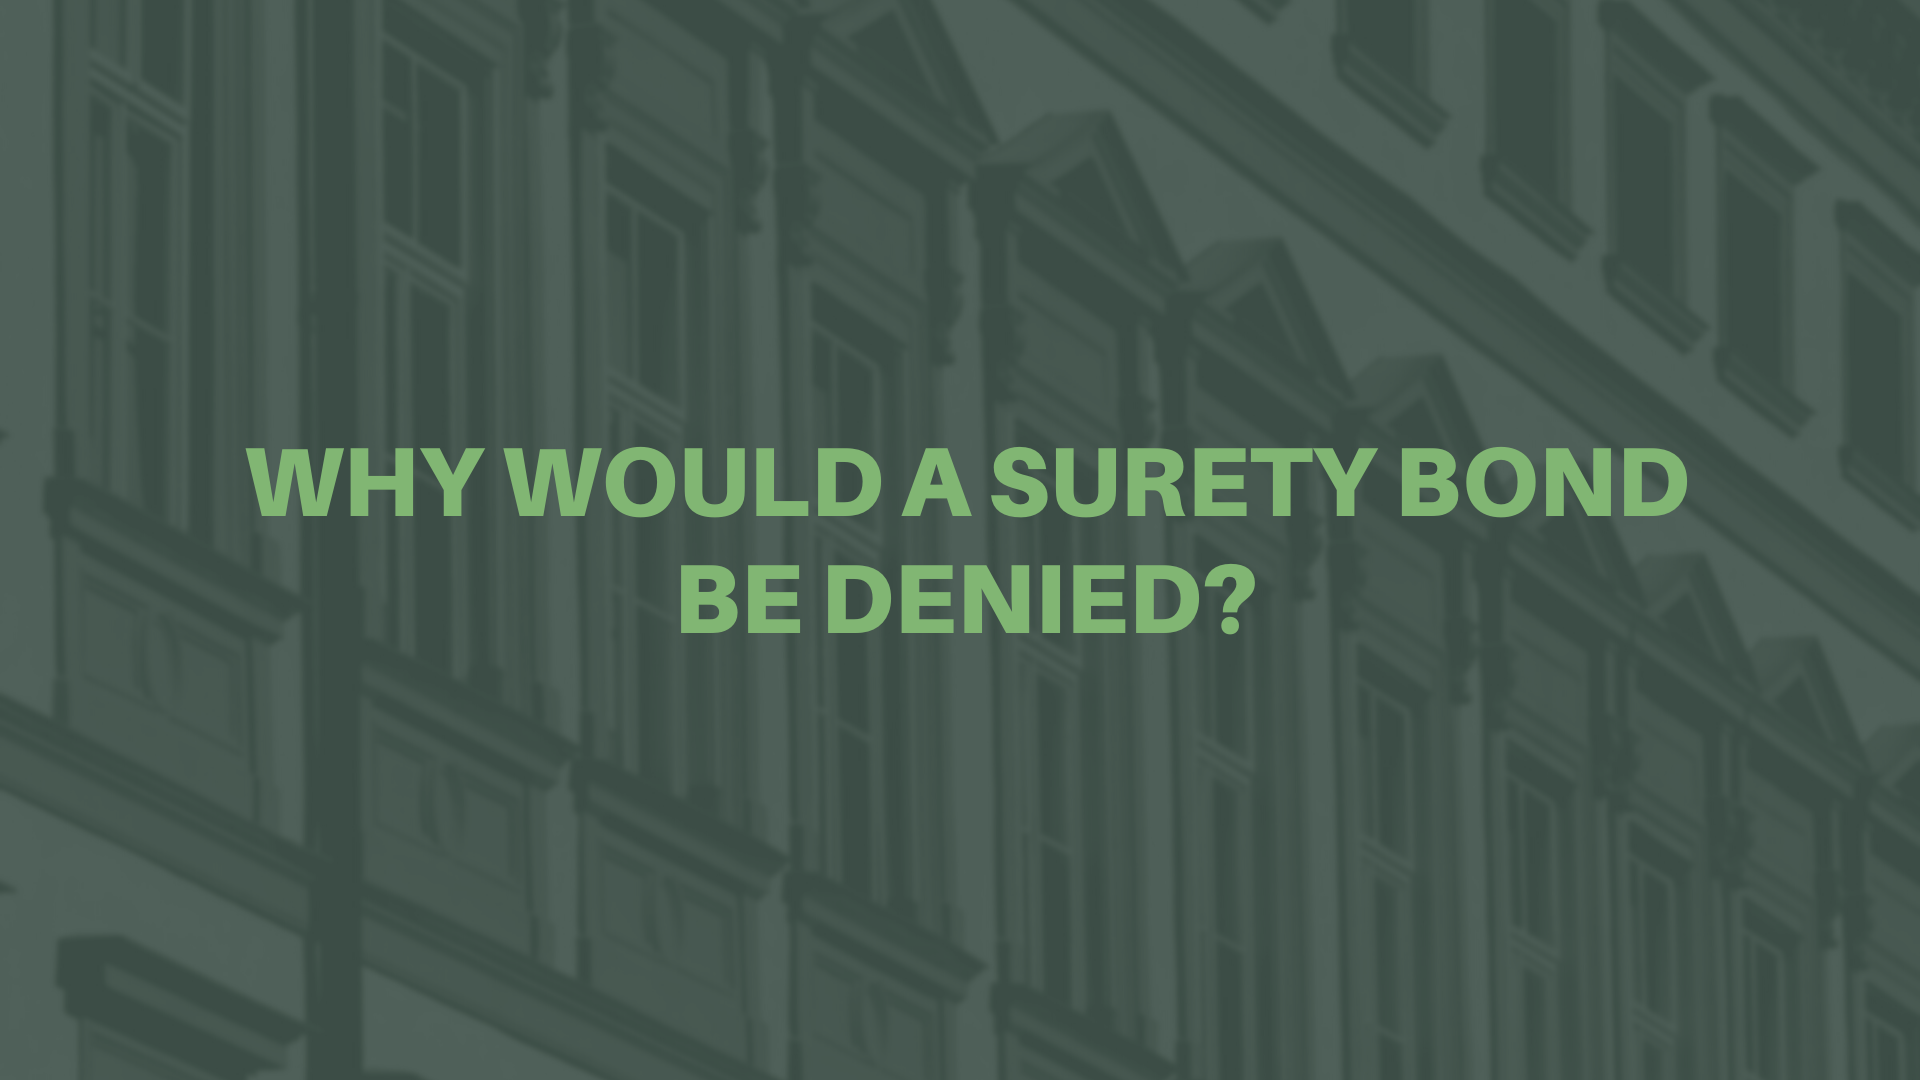 surety bond - Why do companies deny surety bonds - old building exterior